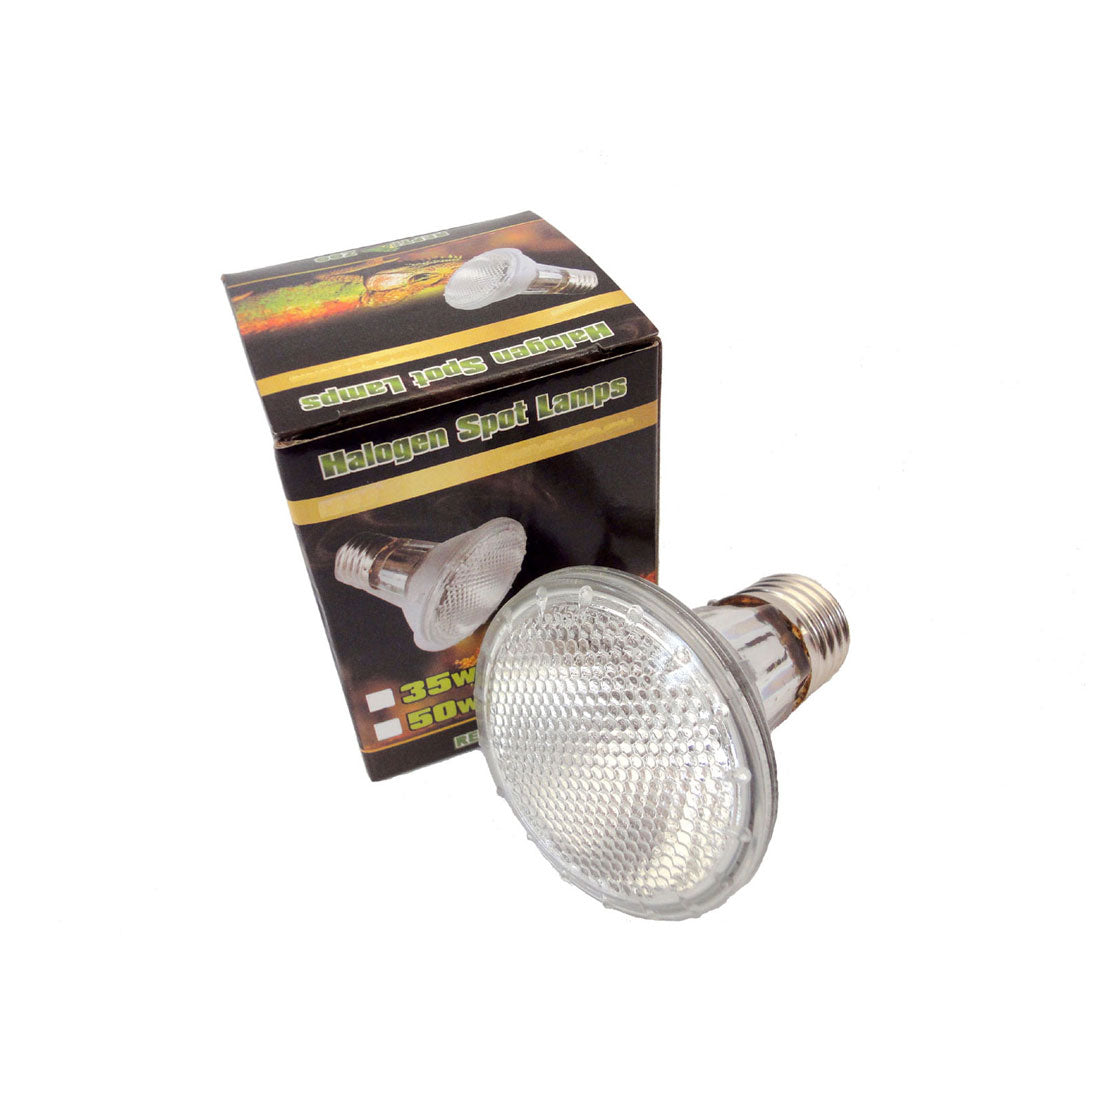 Halogen Spot Lamp 50W E27 Screw Type Pack of 3